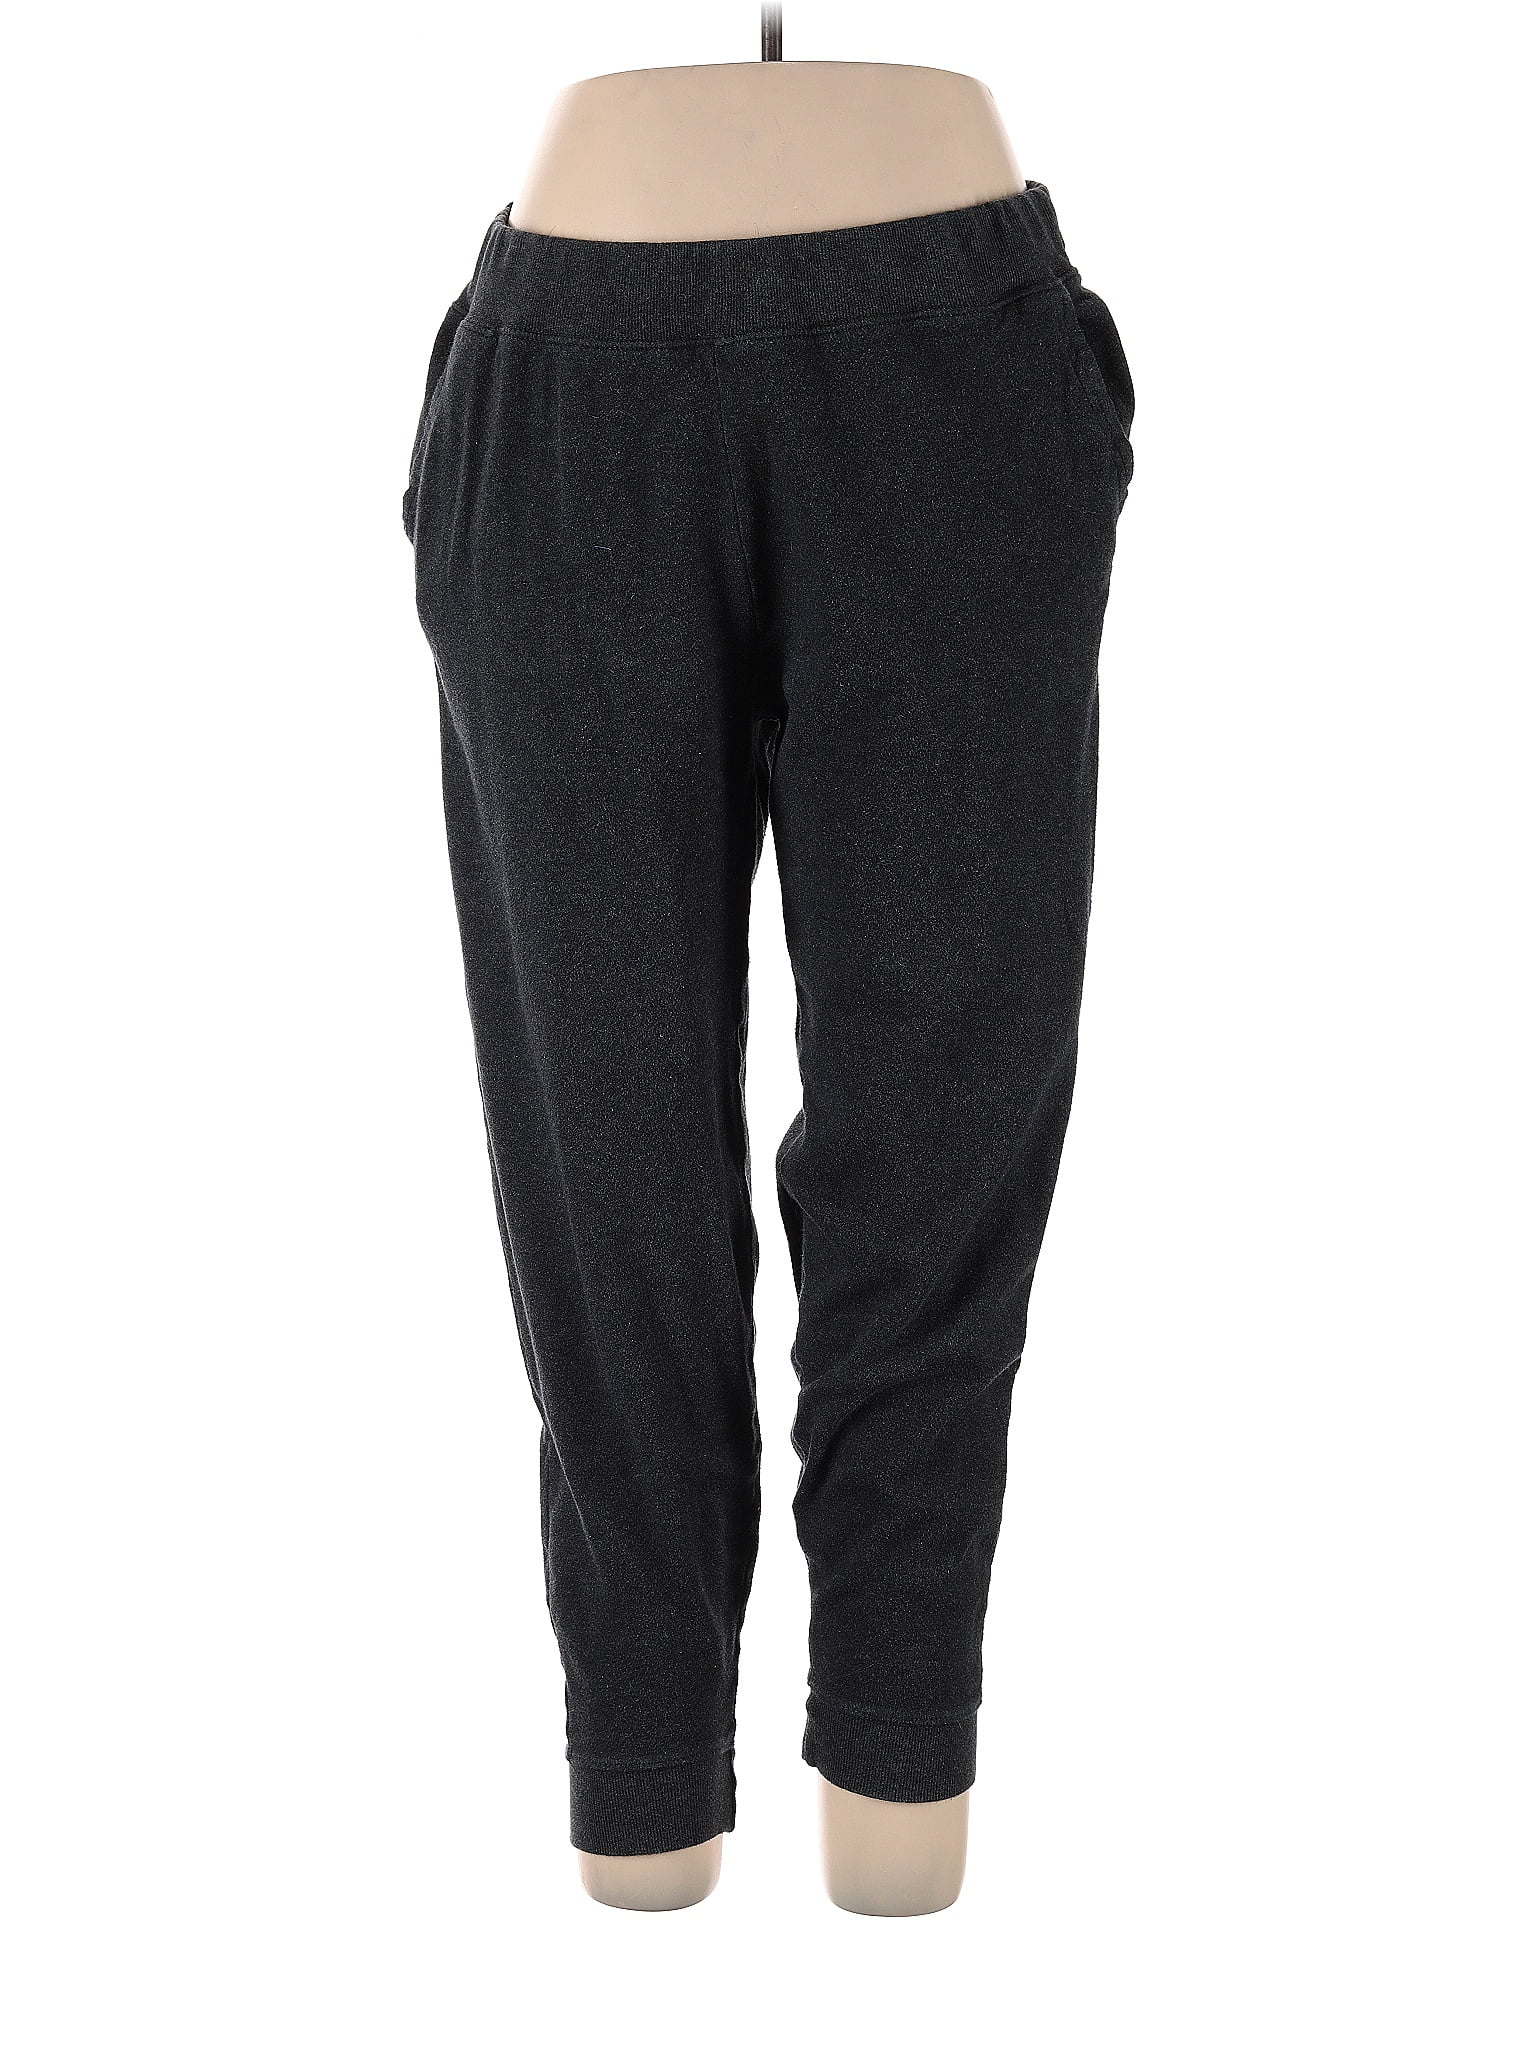 Pact 100% Organic Cotton Polka Dots Black Gray Sweatpants Size XL - 55% off